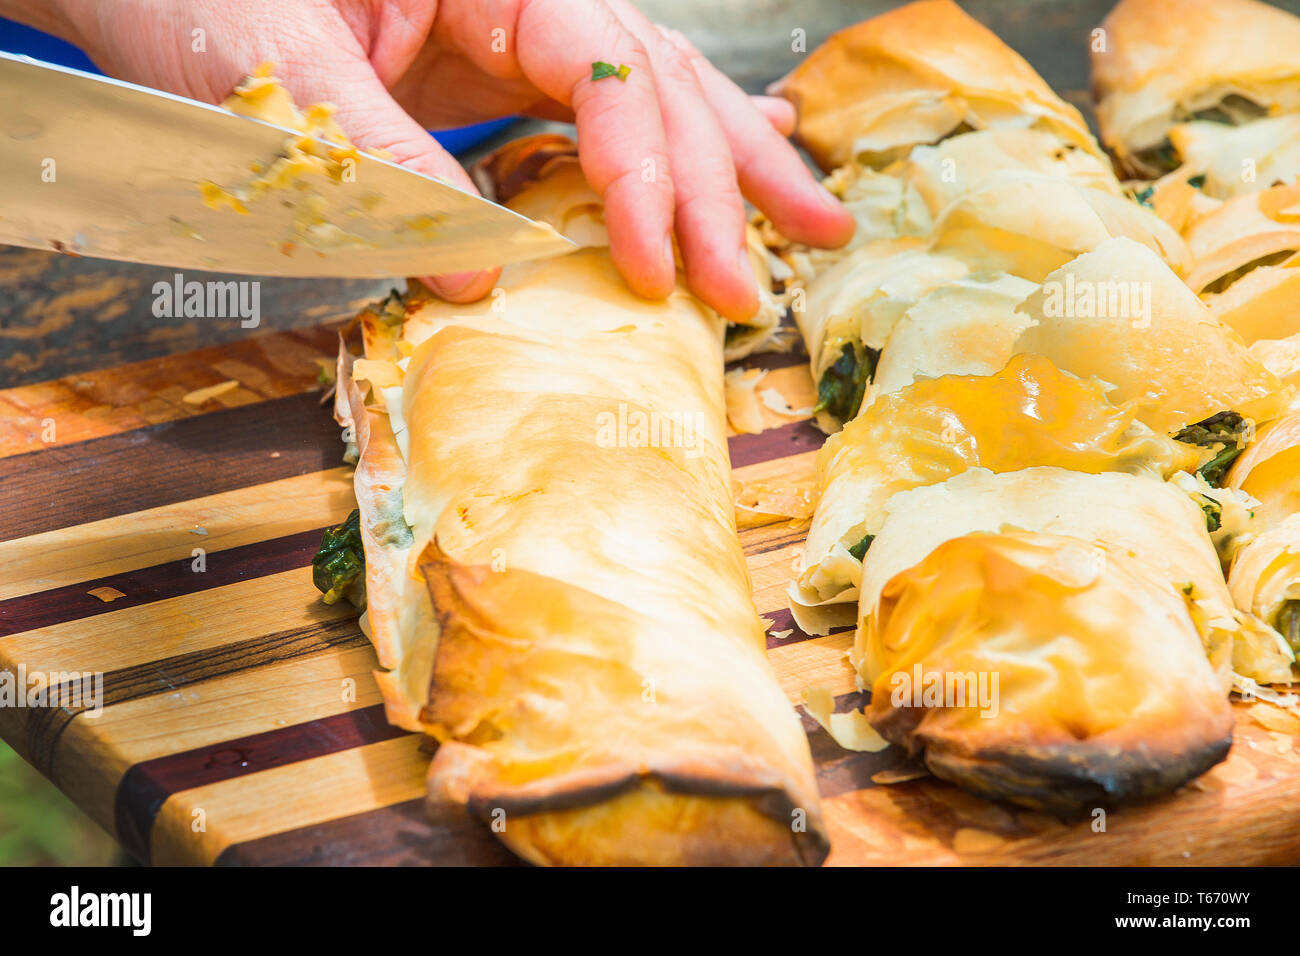 Primer plano de manos preparando spanakopita tarta de espinacas (griego). Foto de stock